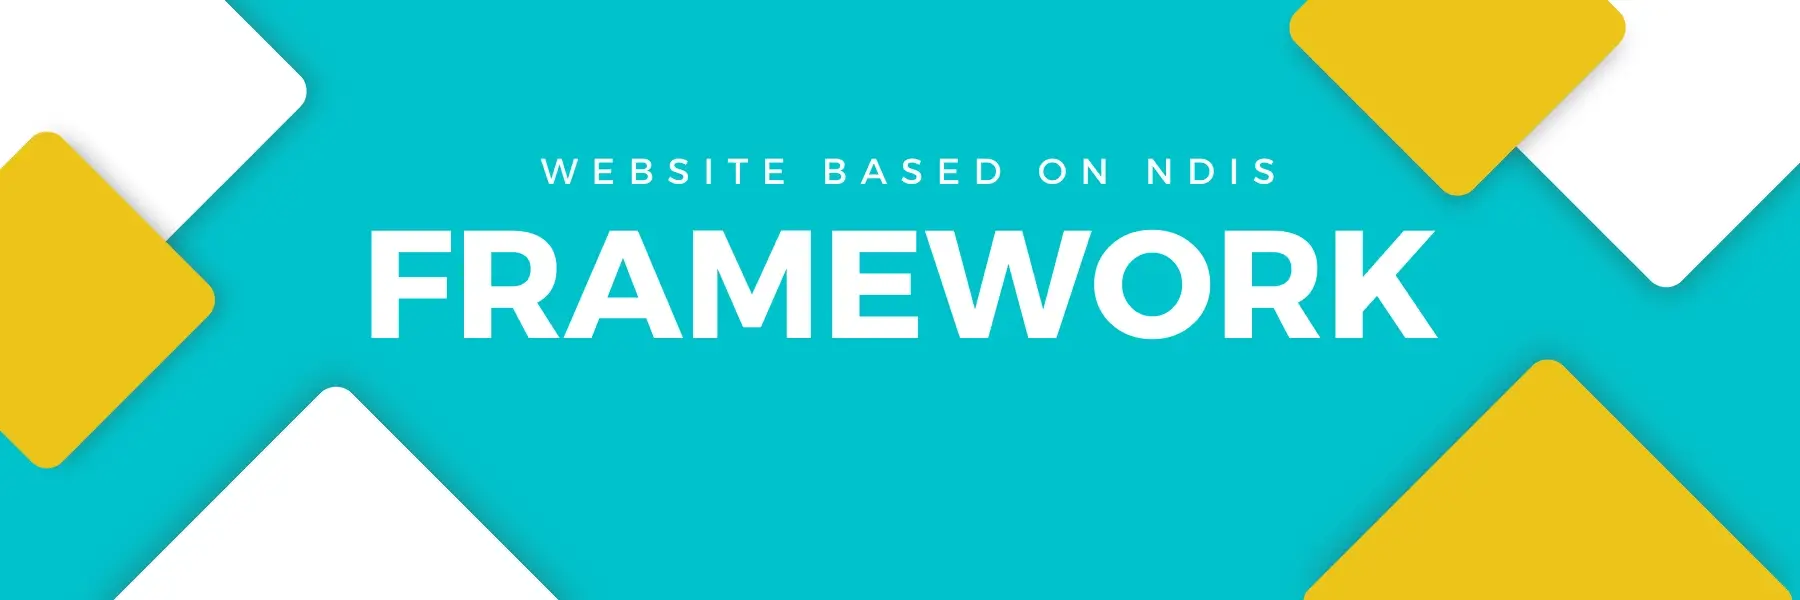 Website based on NDIS Framework